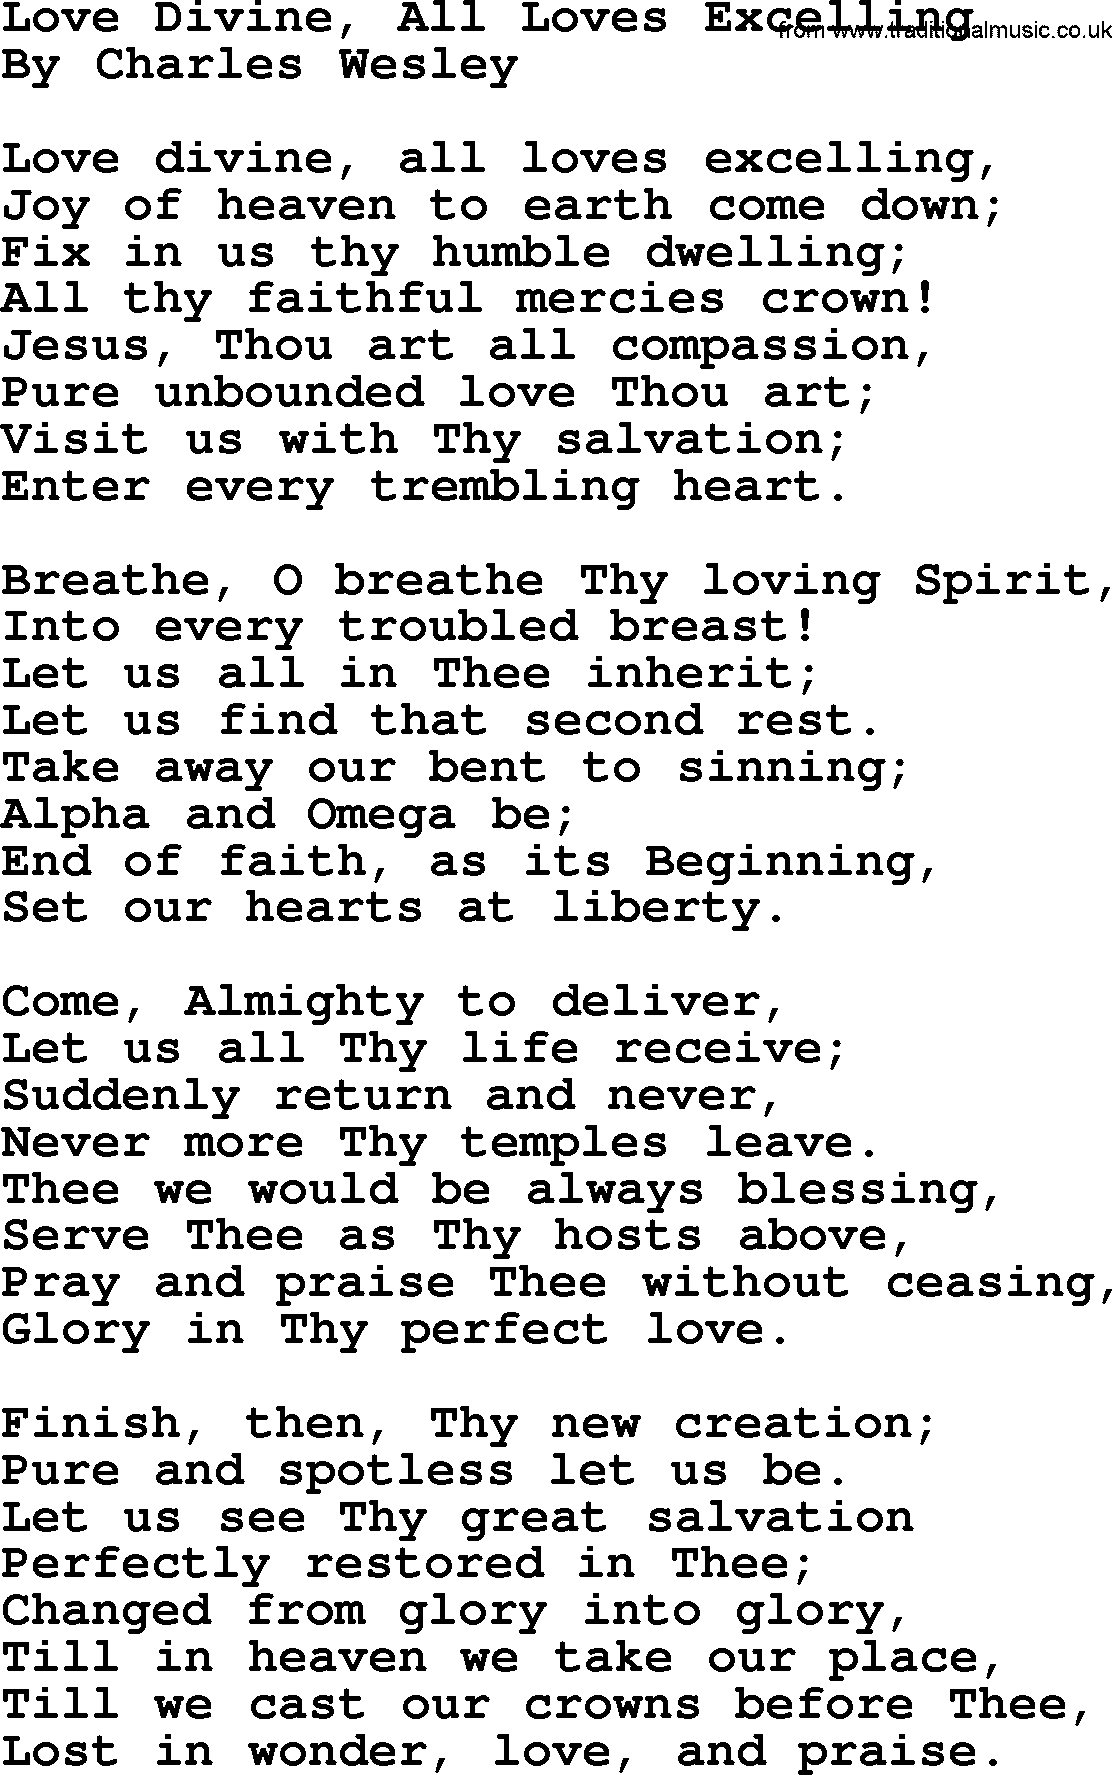 Charles Wesley hymn: Love Divine, All Loves Excelling, lyrics